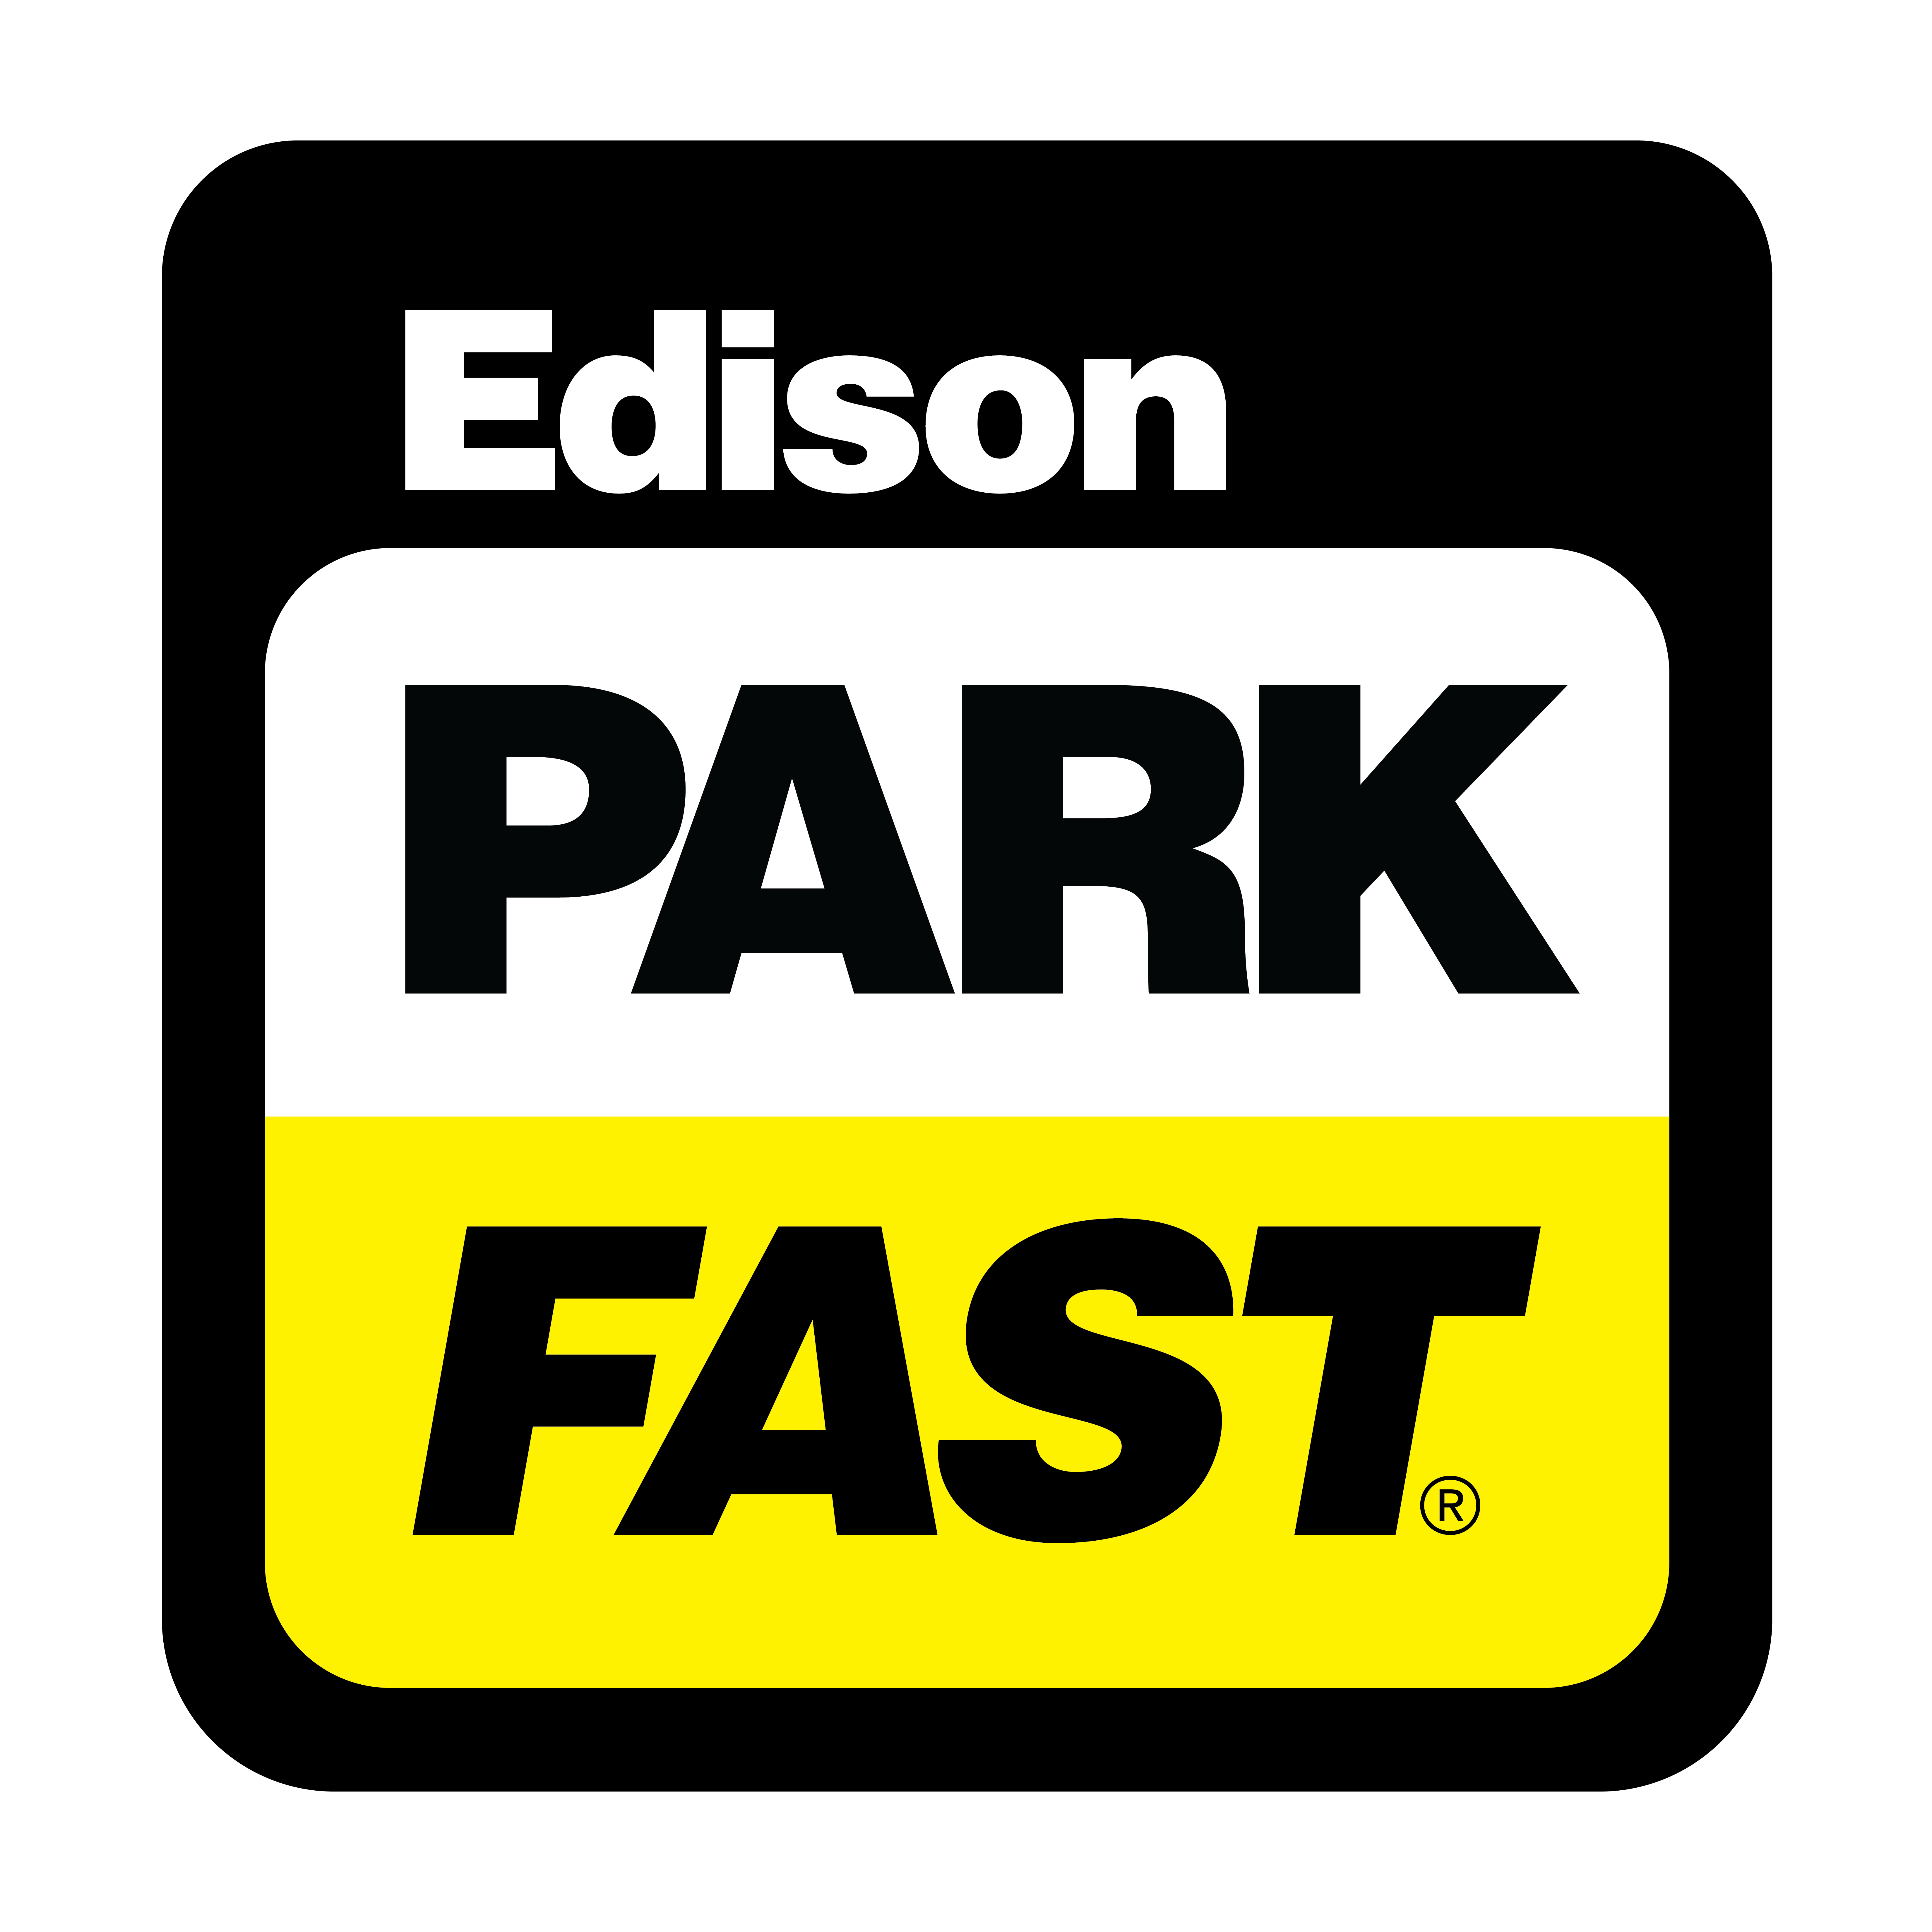 Edison ParkFast - New York, NY 10018 - (888)727-5327 | ShowMeLocal.com